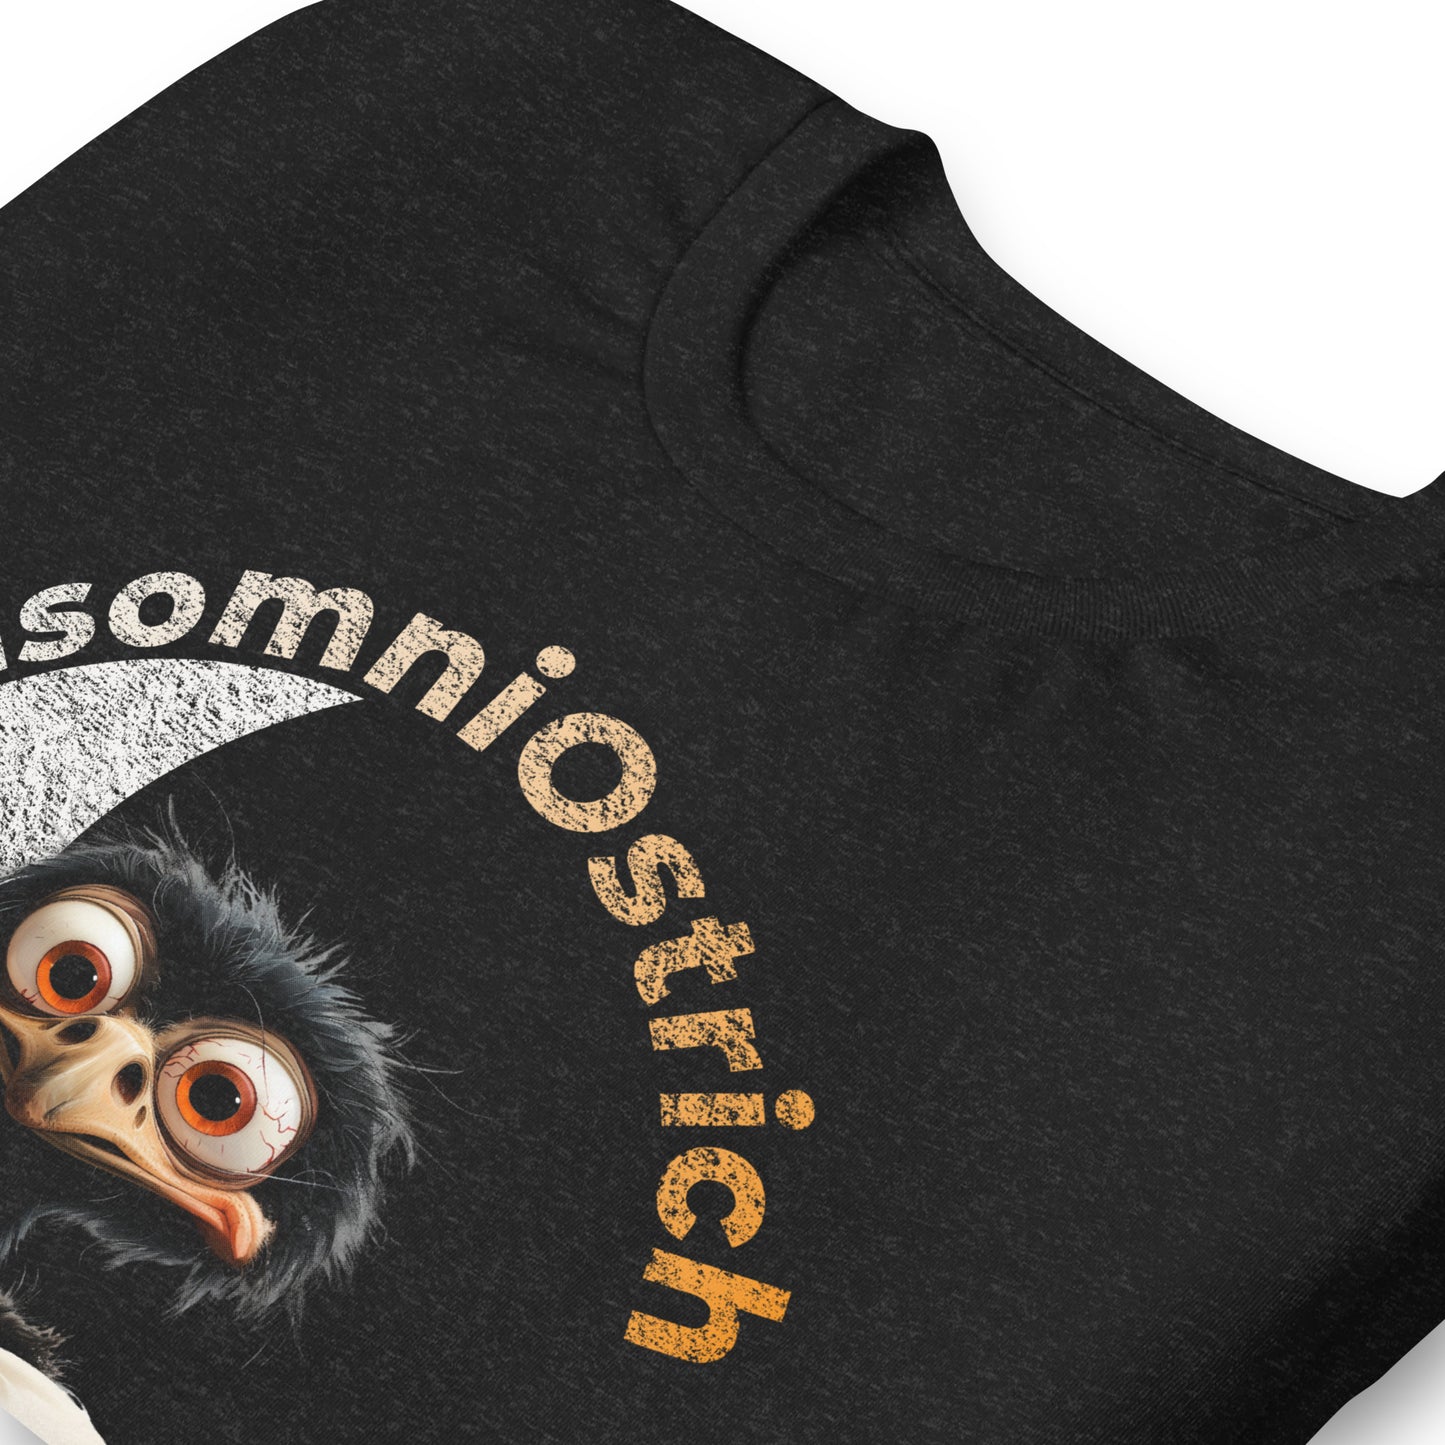 InsomniOstrich, Insomniac Ostrich, Insomnia, Animals, Sleep Disorders, Graphic Tee Shirt, Black